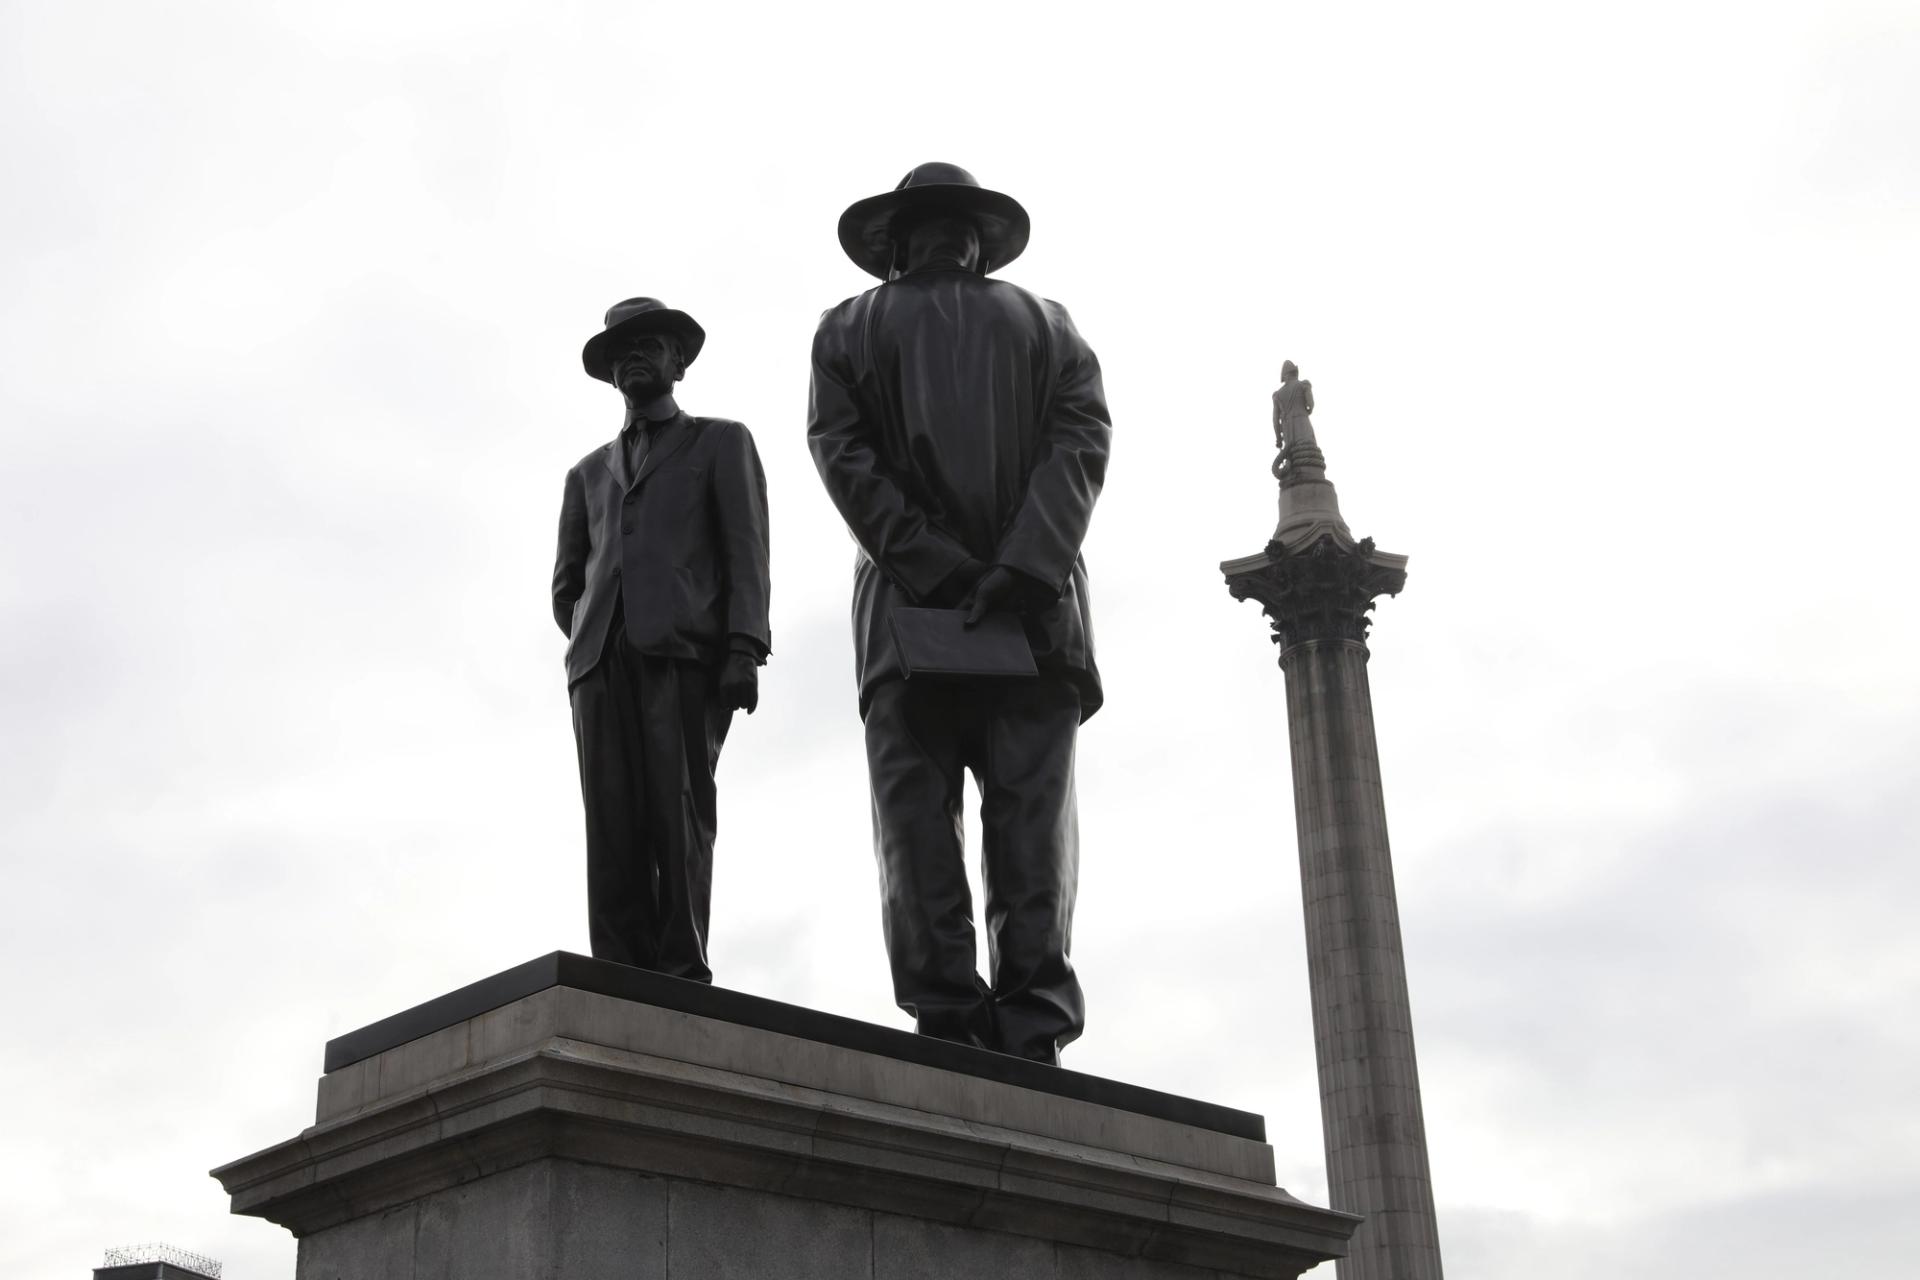 Samson Kambalu's commission for the Fourth Plinth in London, Antelope Photo: James O'Jenkins